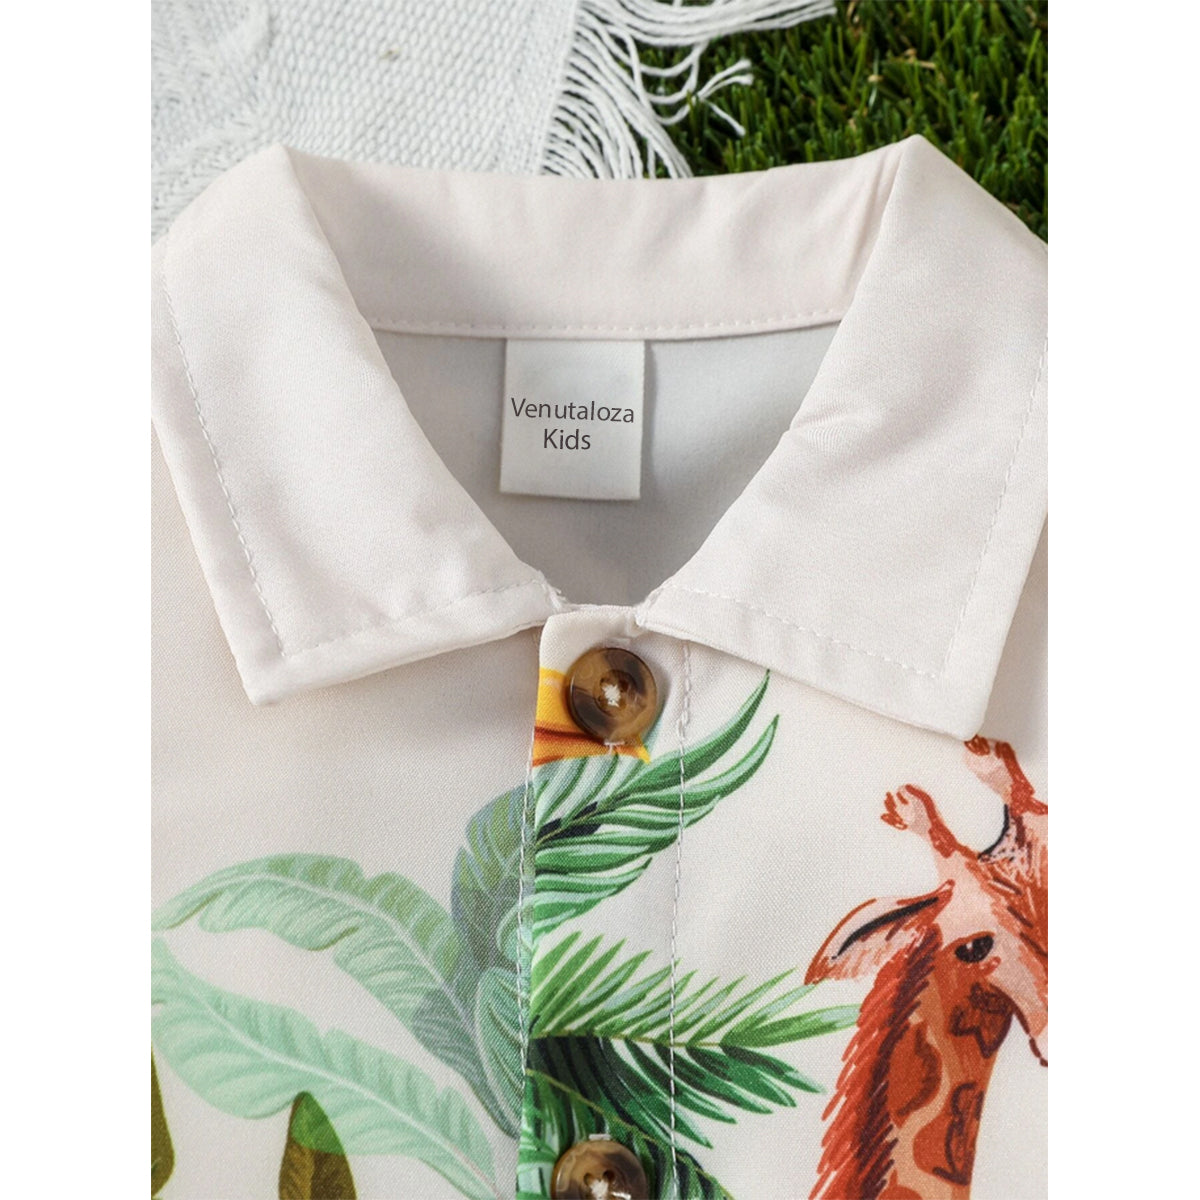 Venutaloza Baby Boy Palm Tree & Animal Printed Short Sleeve Shirt And Shorts Two Piece Set.